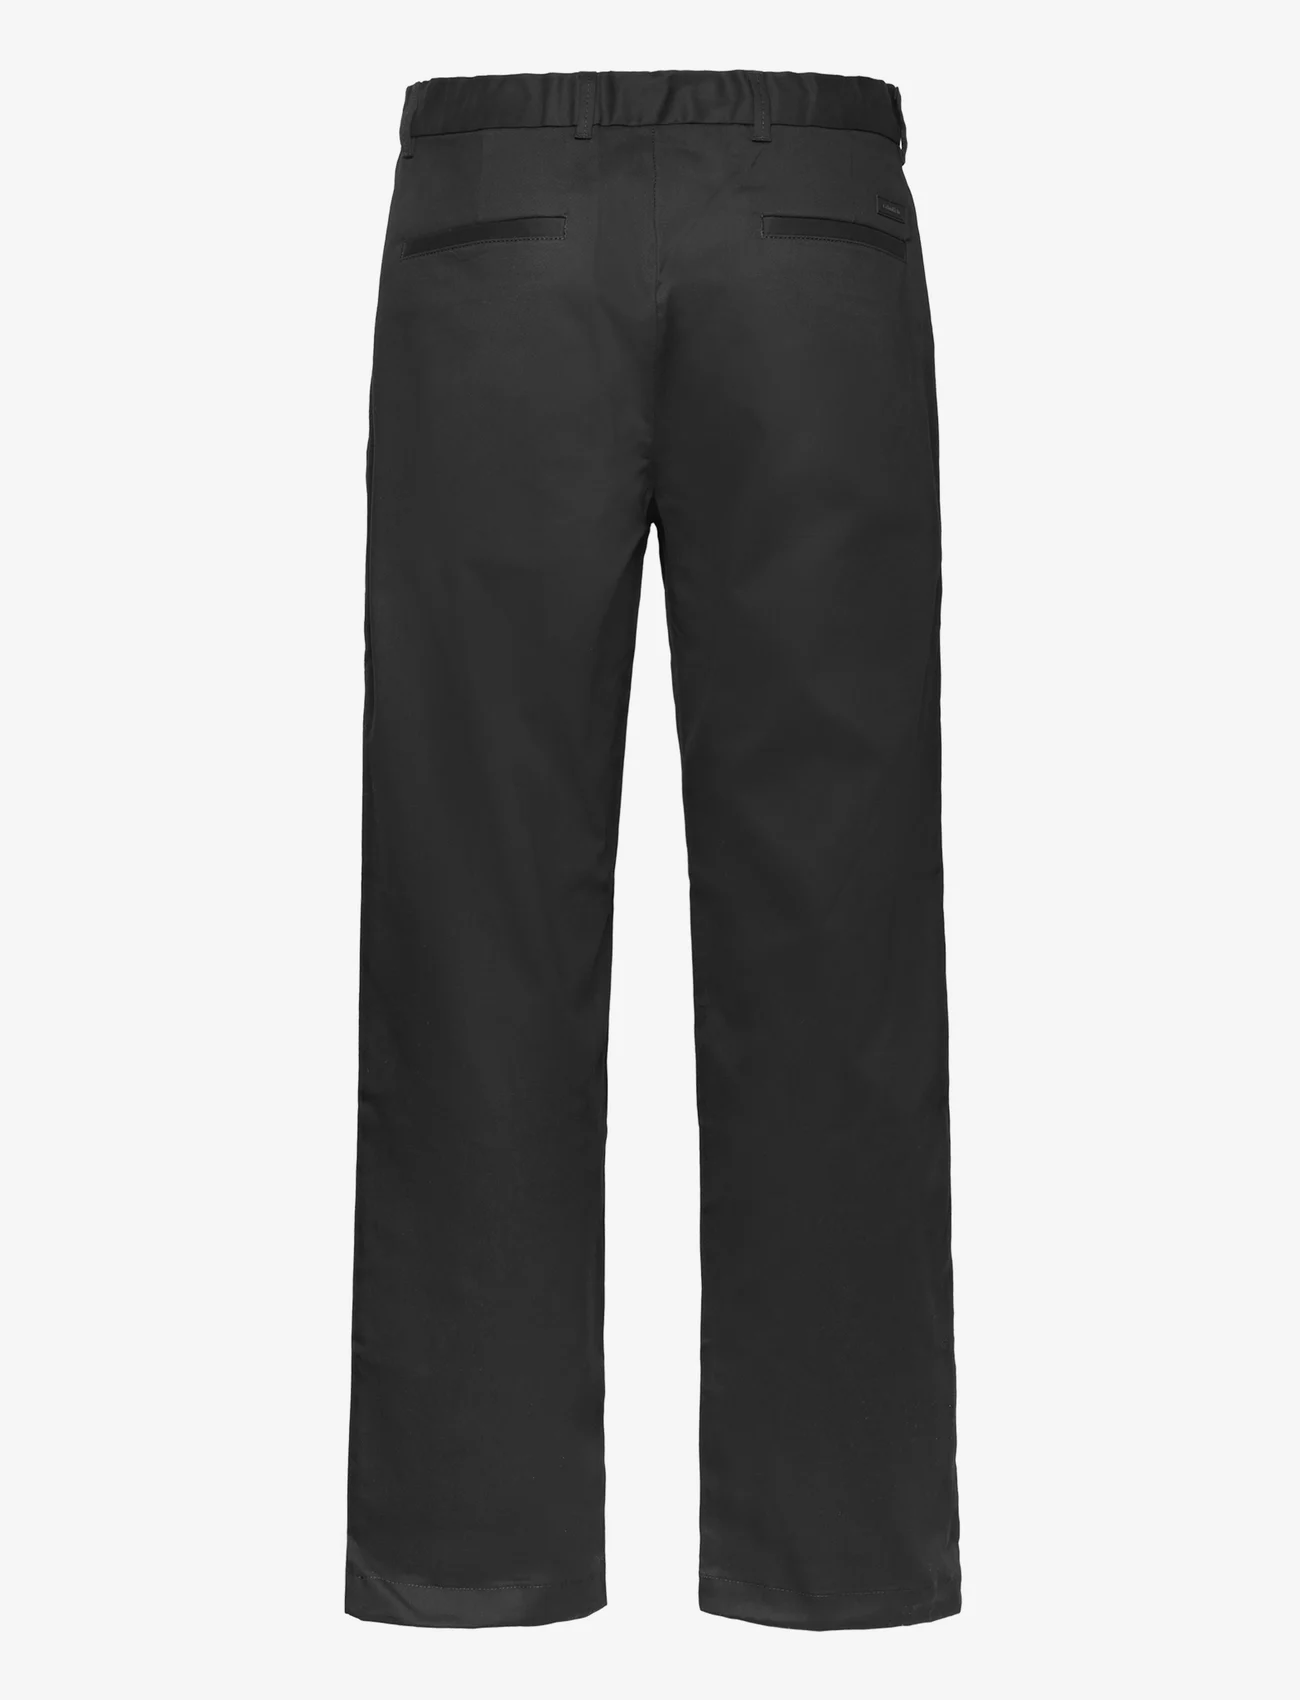 Calvin Klein - MODERN TWILL RELAXED PANTS - chino püksid - ck black - 1